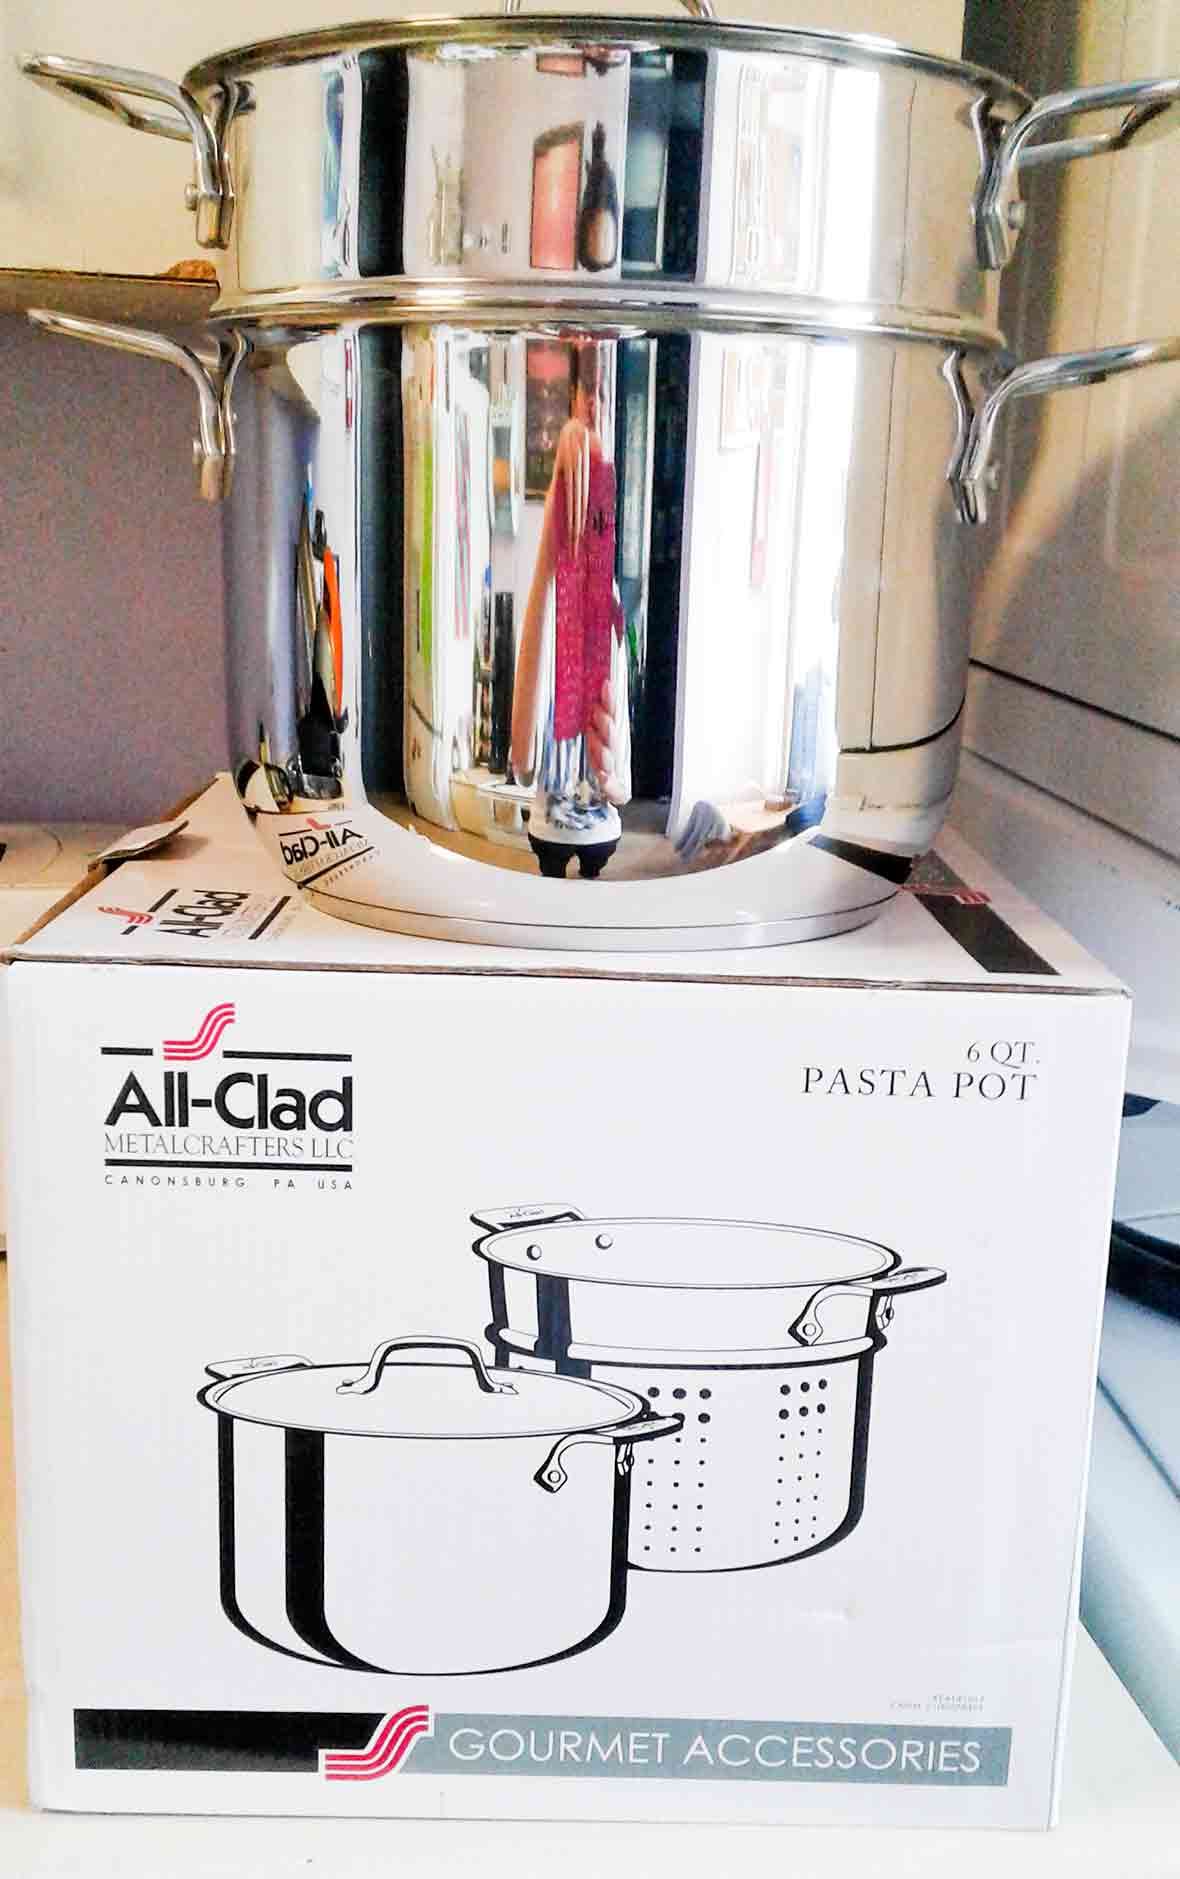 An All-Clad pasta pot sitting on its box